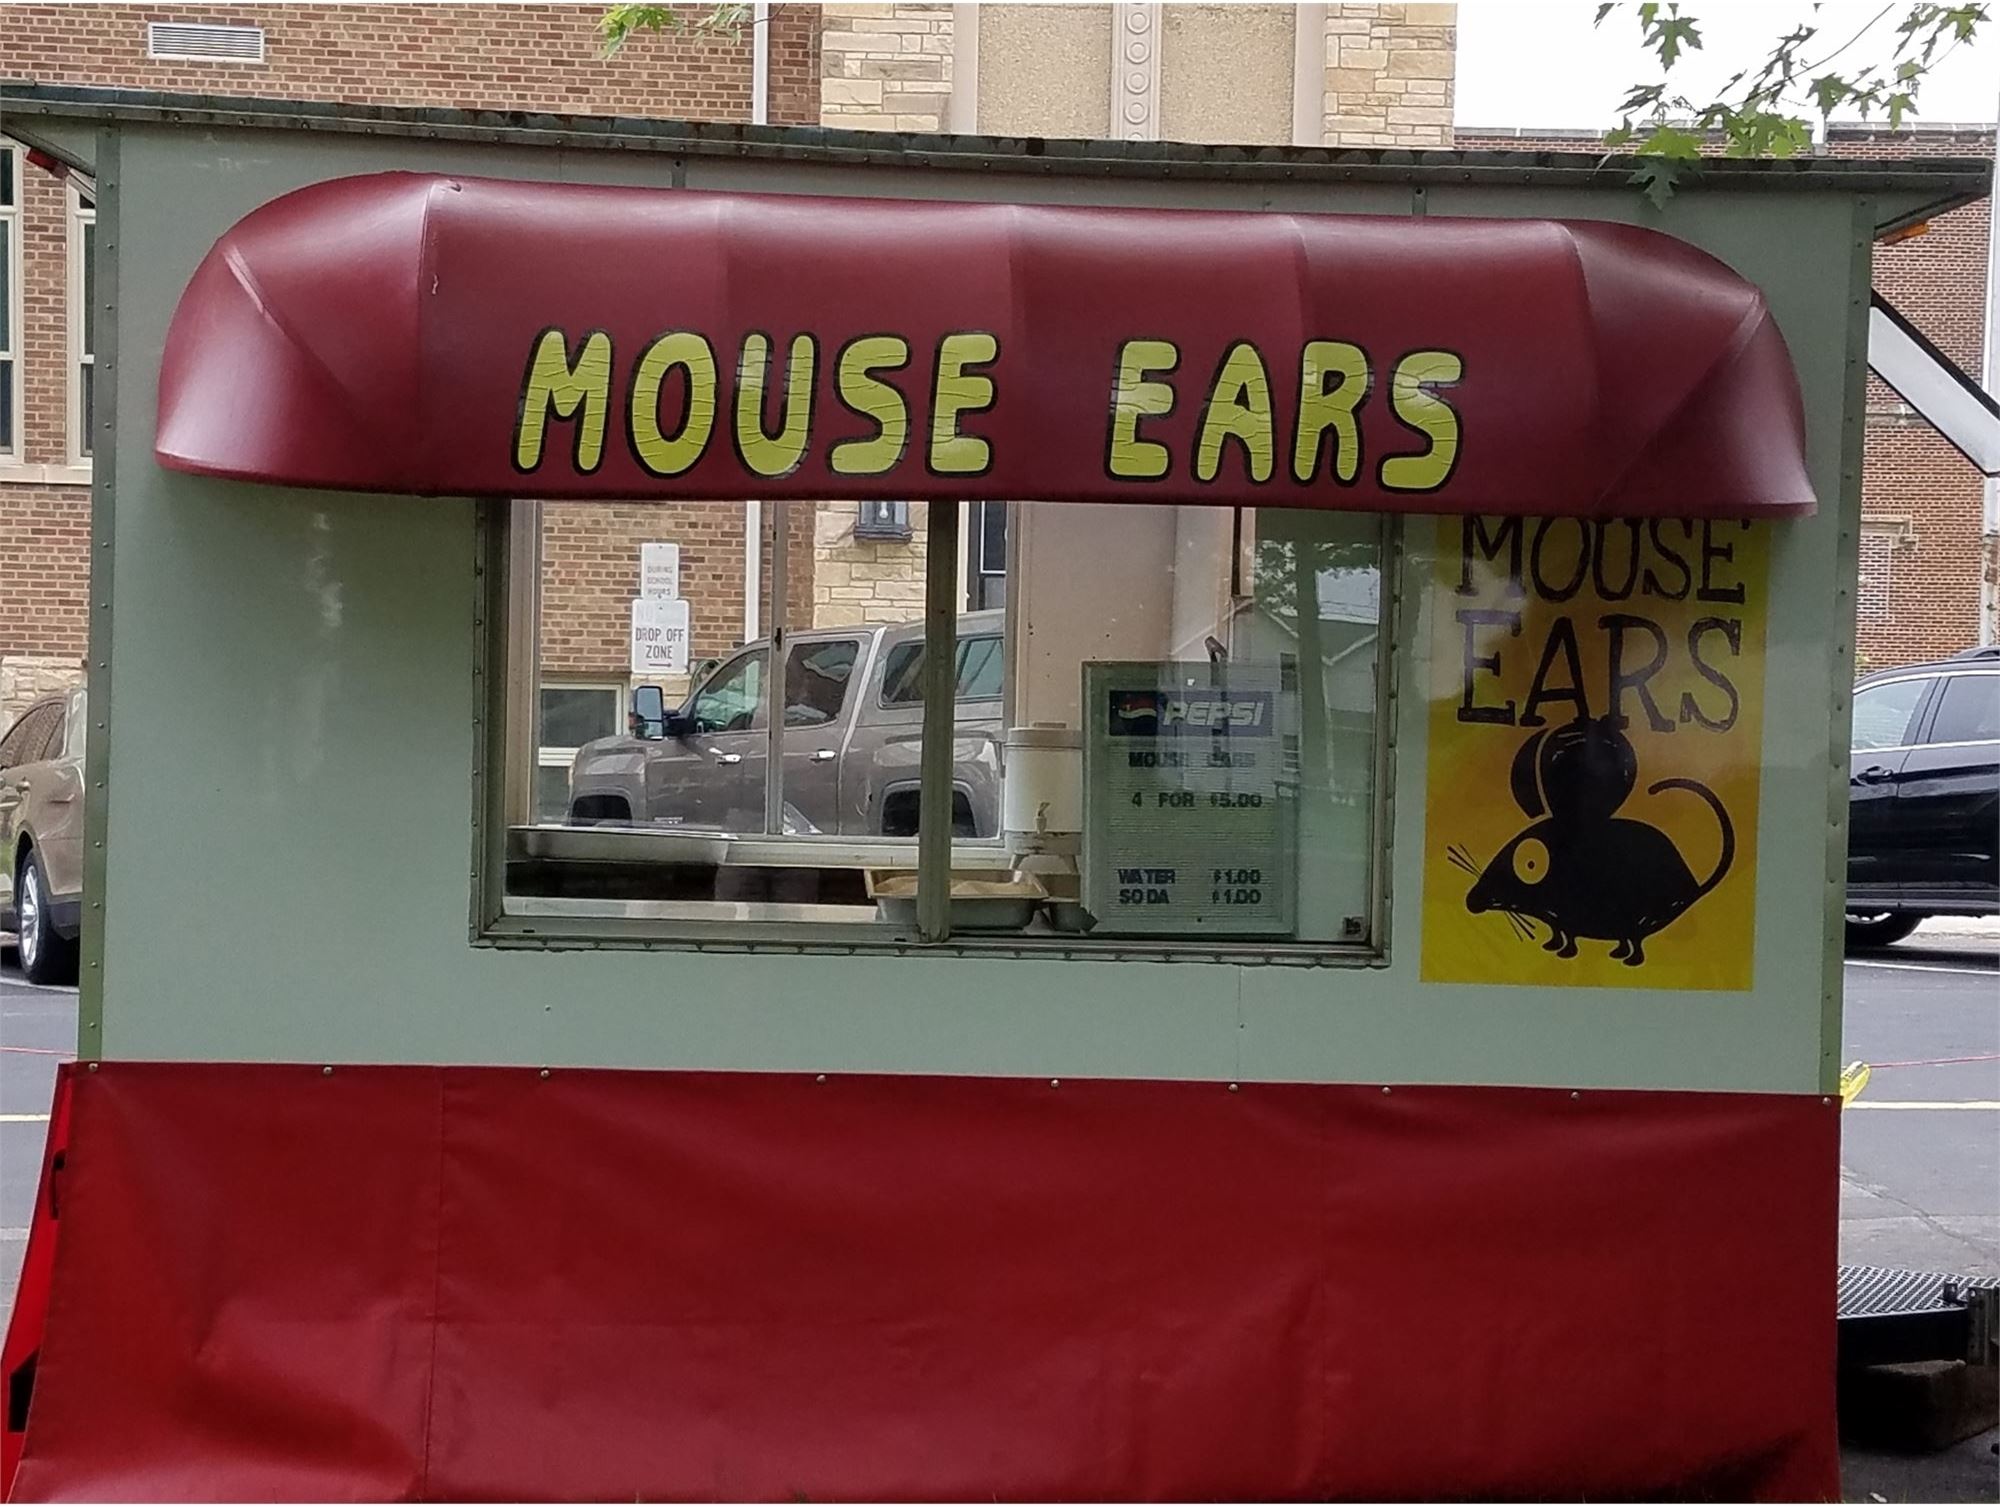 C&C Concessions - Mouse Ears